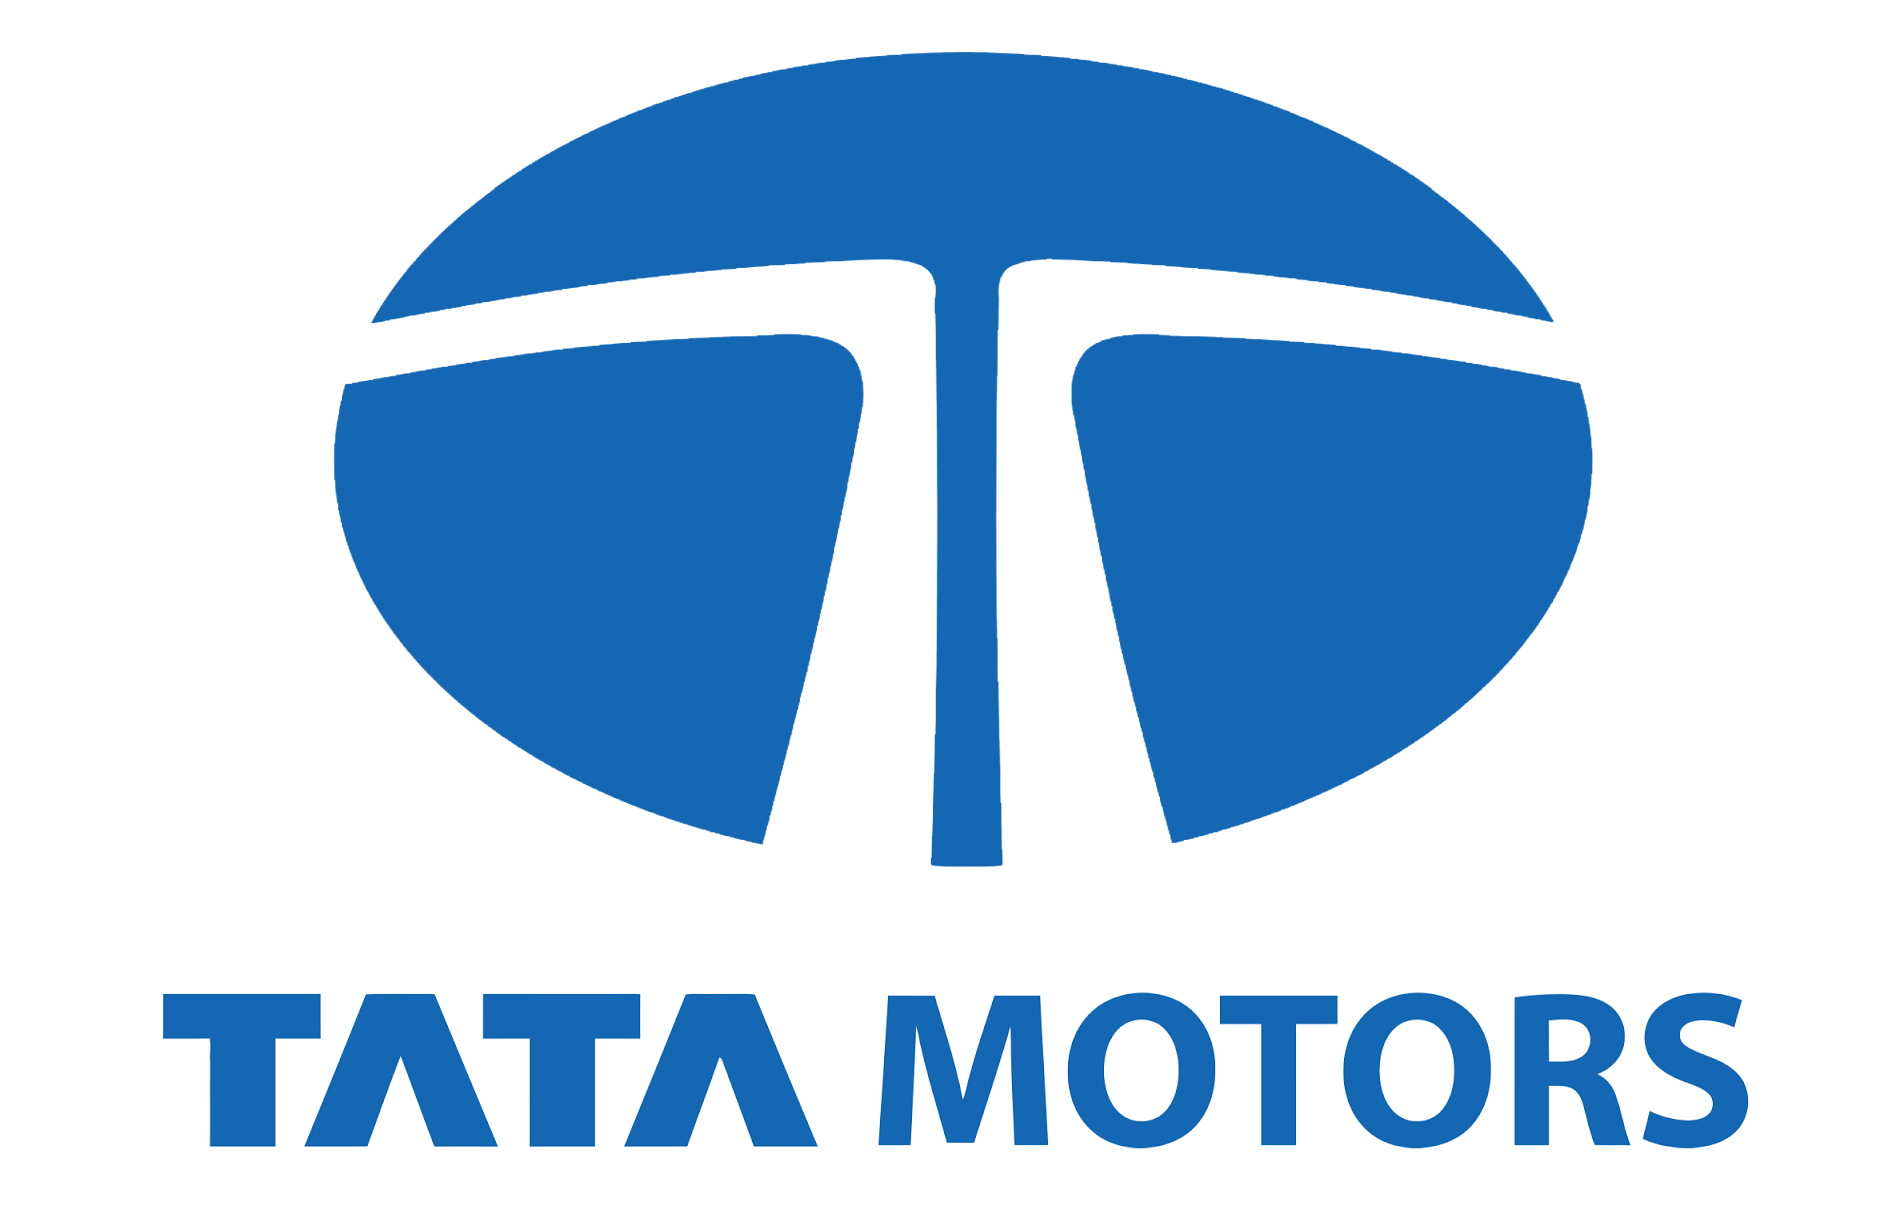 Tata Motors Cars Showroom - Shraddha Motors|Show Room|Automotive